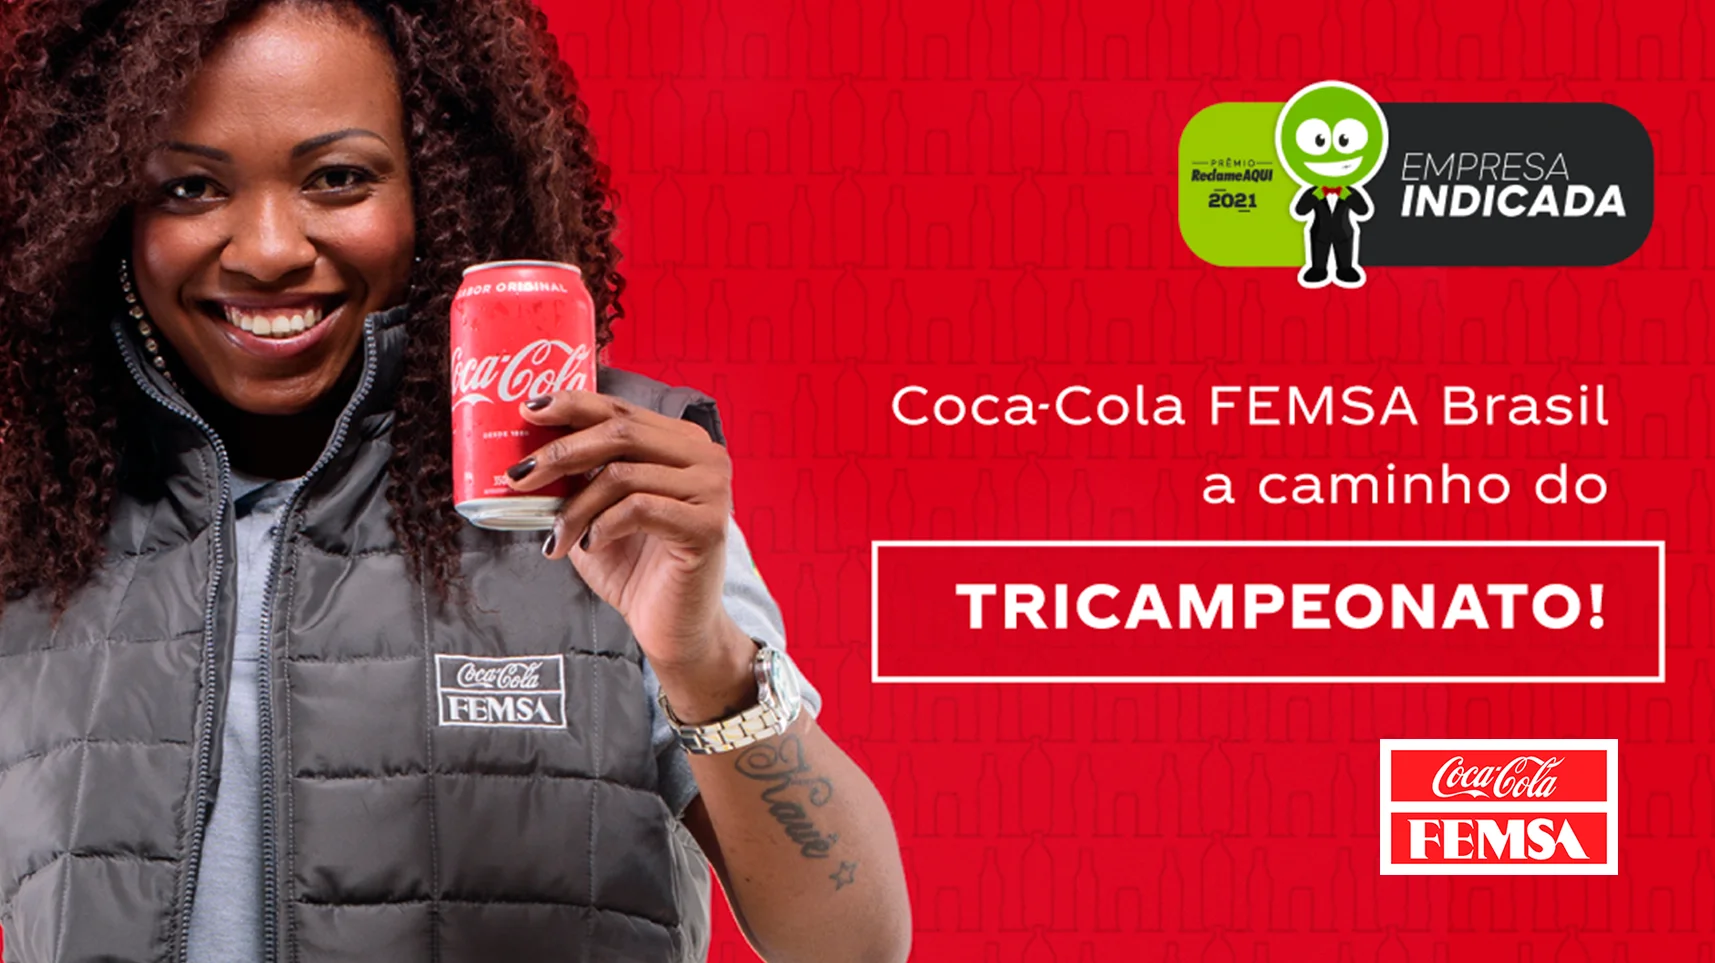 Coca-Cola FEMSA indicada no Premio Reclame aqui 2021.